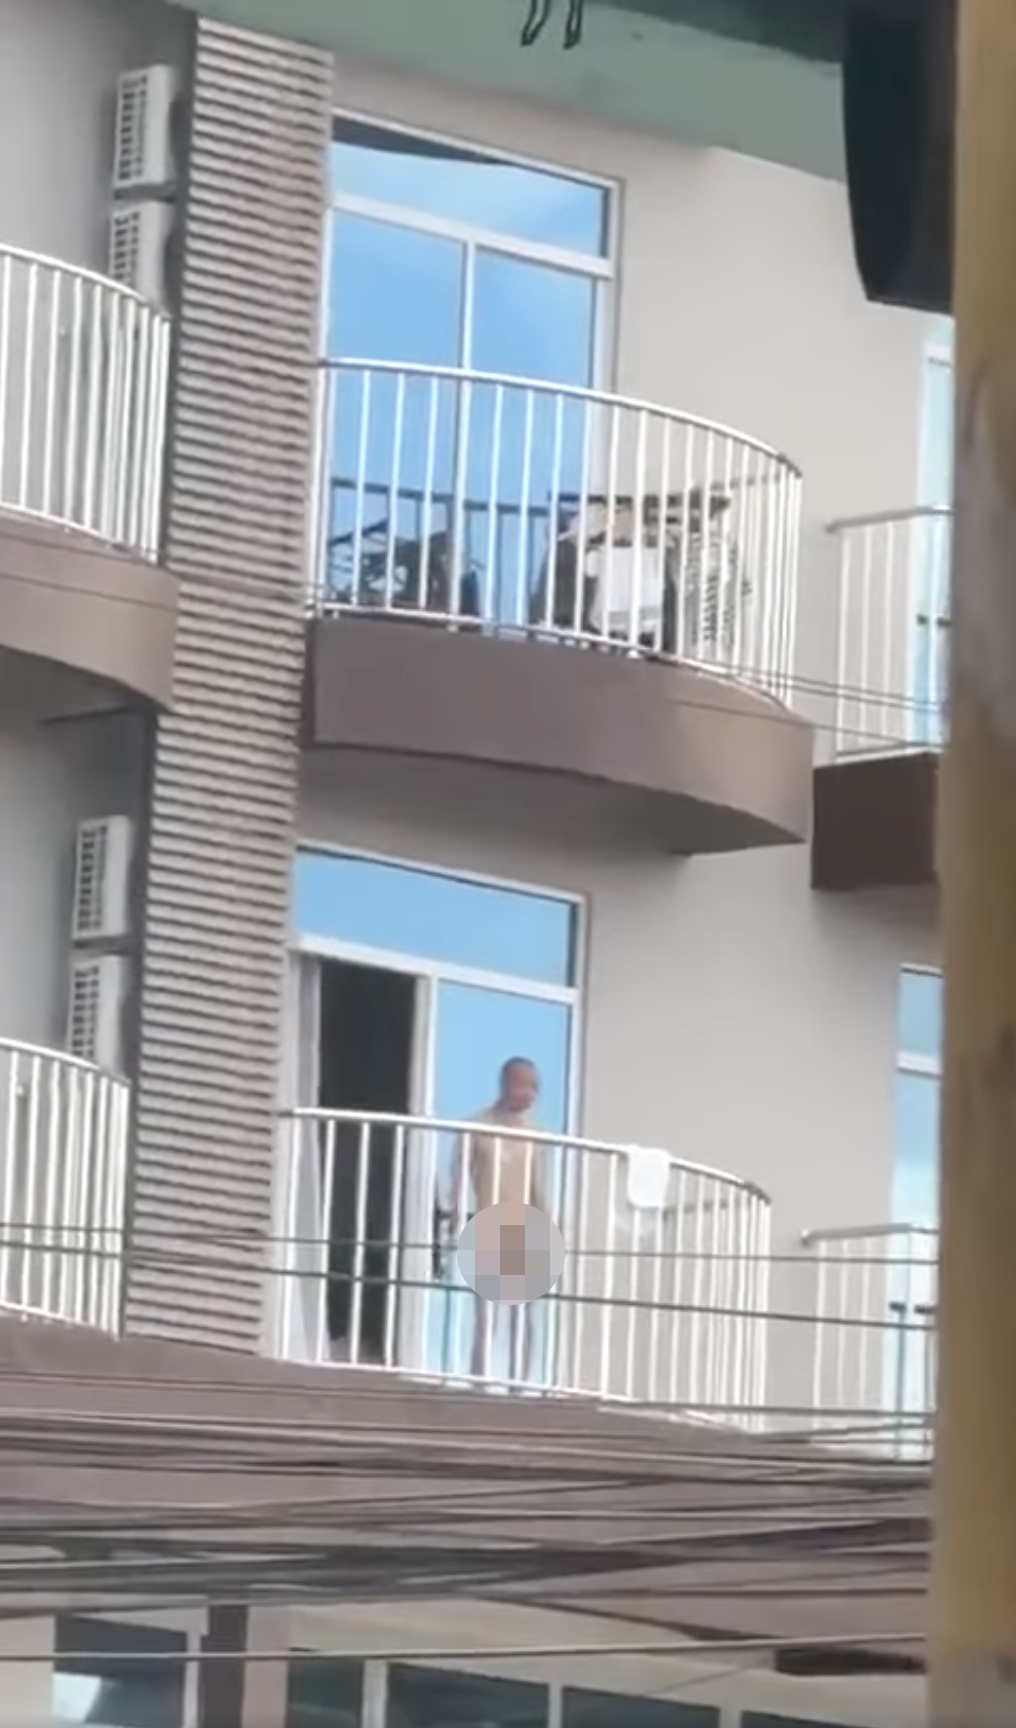 Tourist seen walking naked at sabah hotel balcony, nabbed by police | weirdkaya